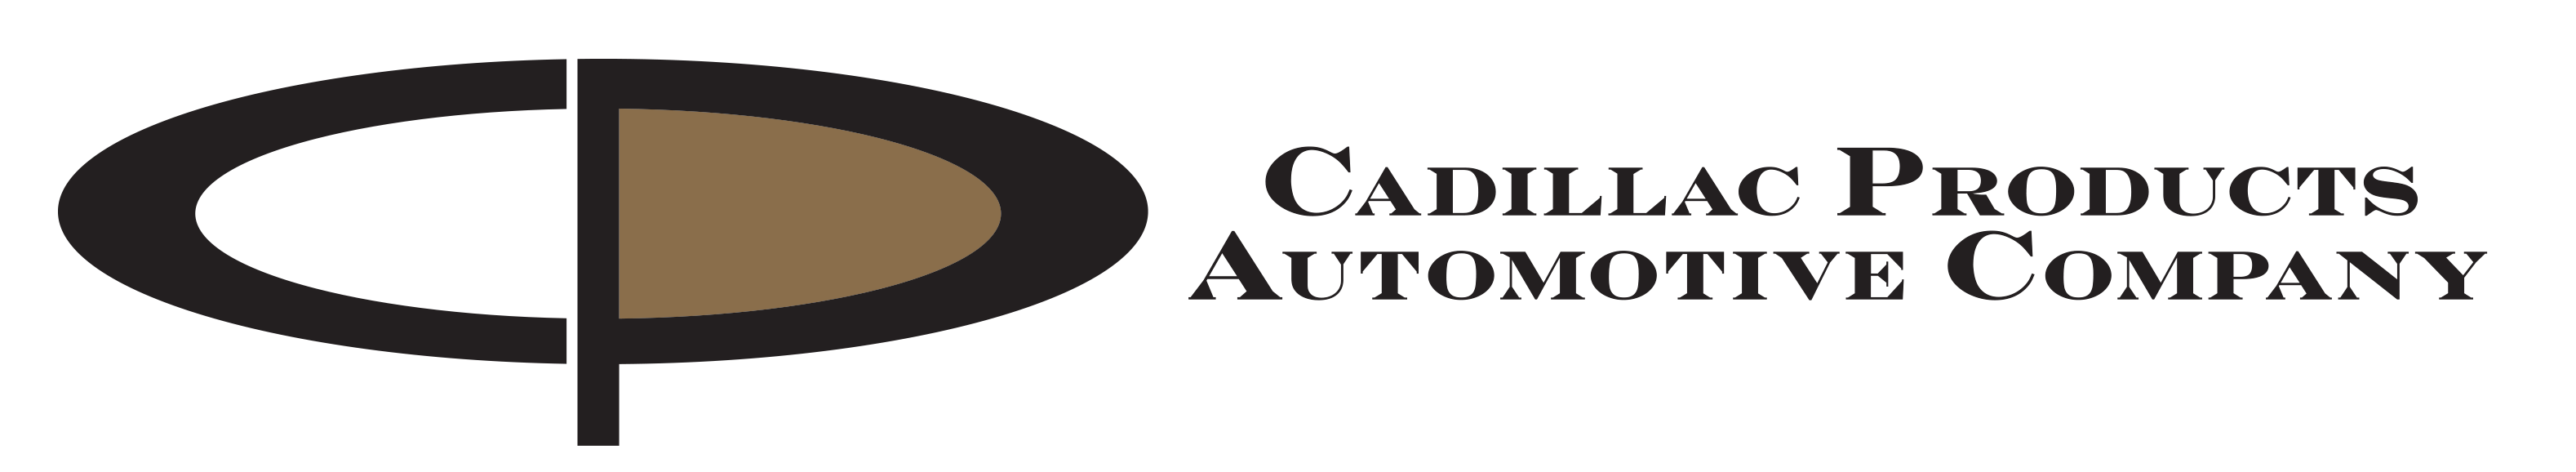 Cadillac Products Automotive Company